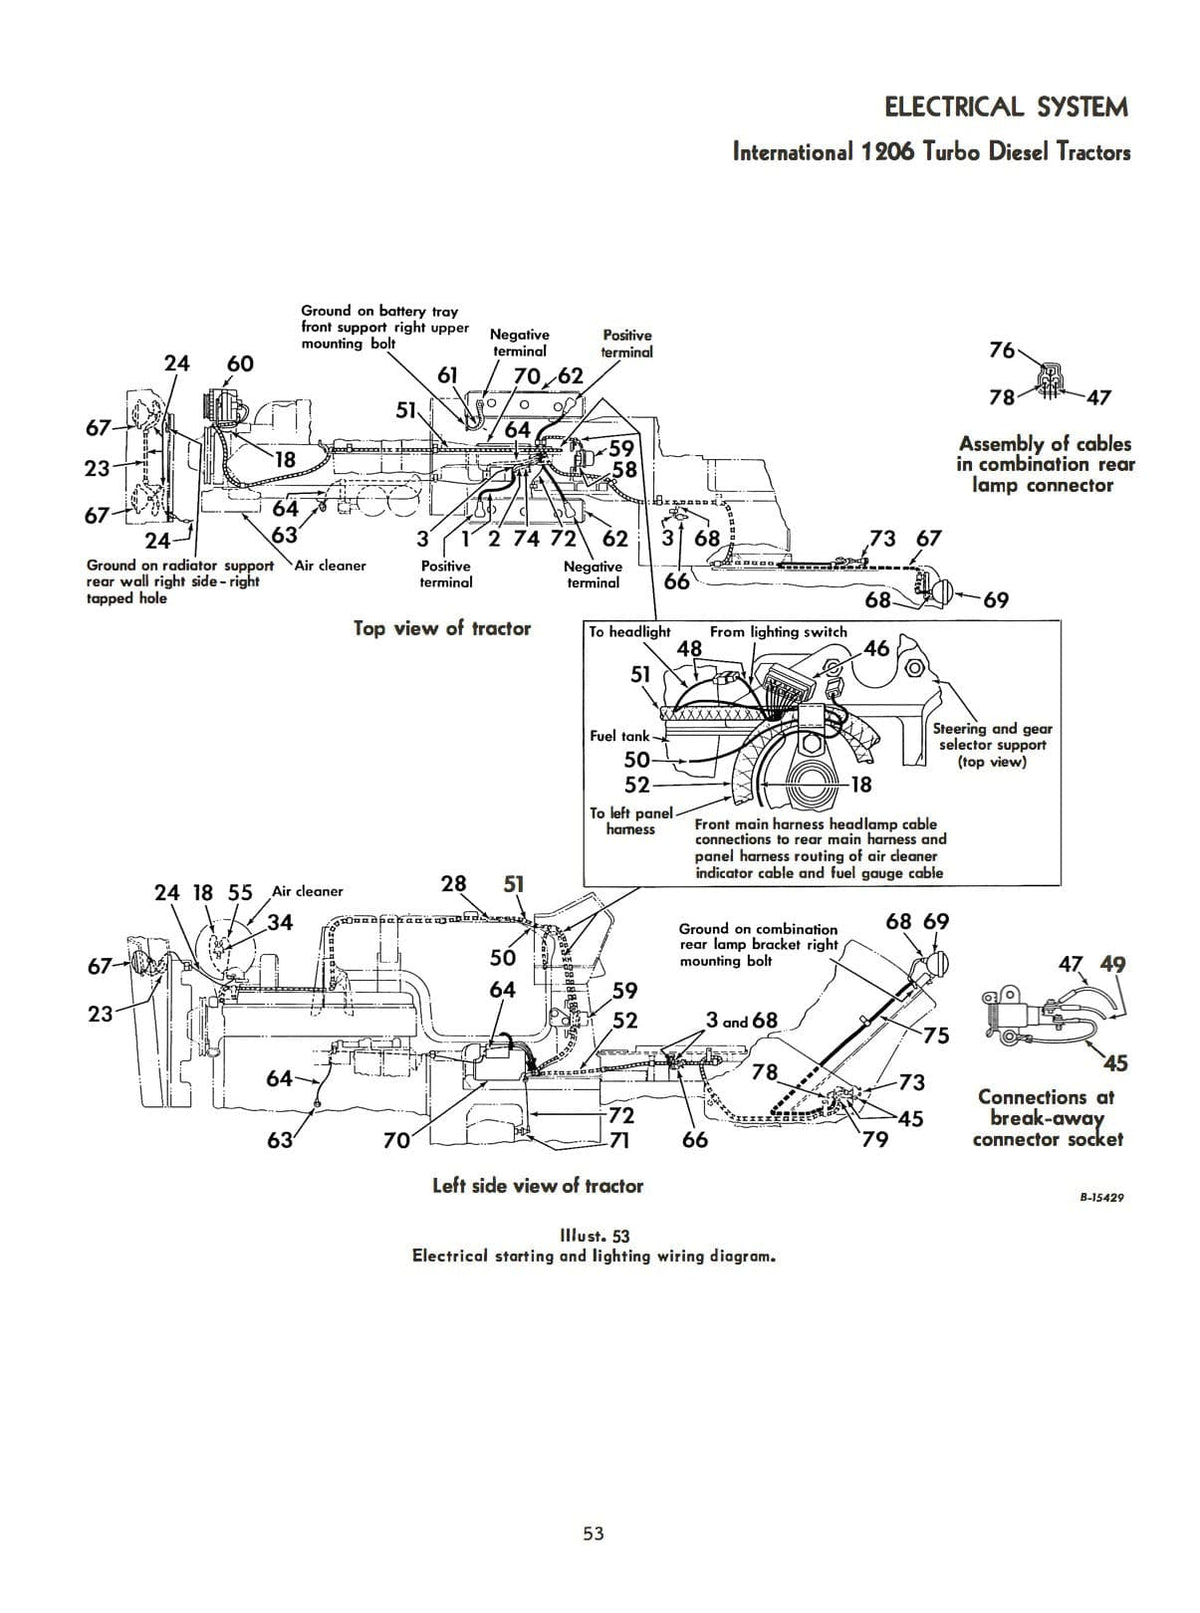 McCormick Farmall and International 1206 Turbo Diesel Tractors  - Operator's Manual - Ag Manuals - A Provider of Digital Farm Manuals - 3